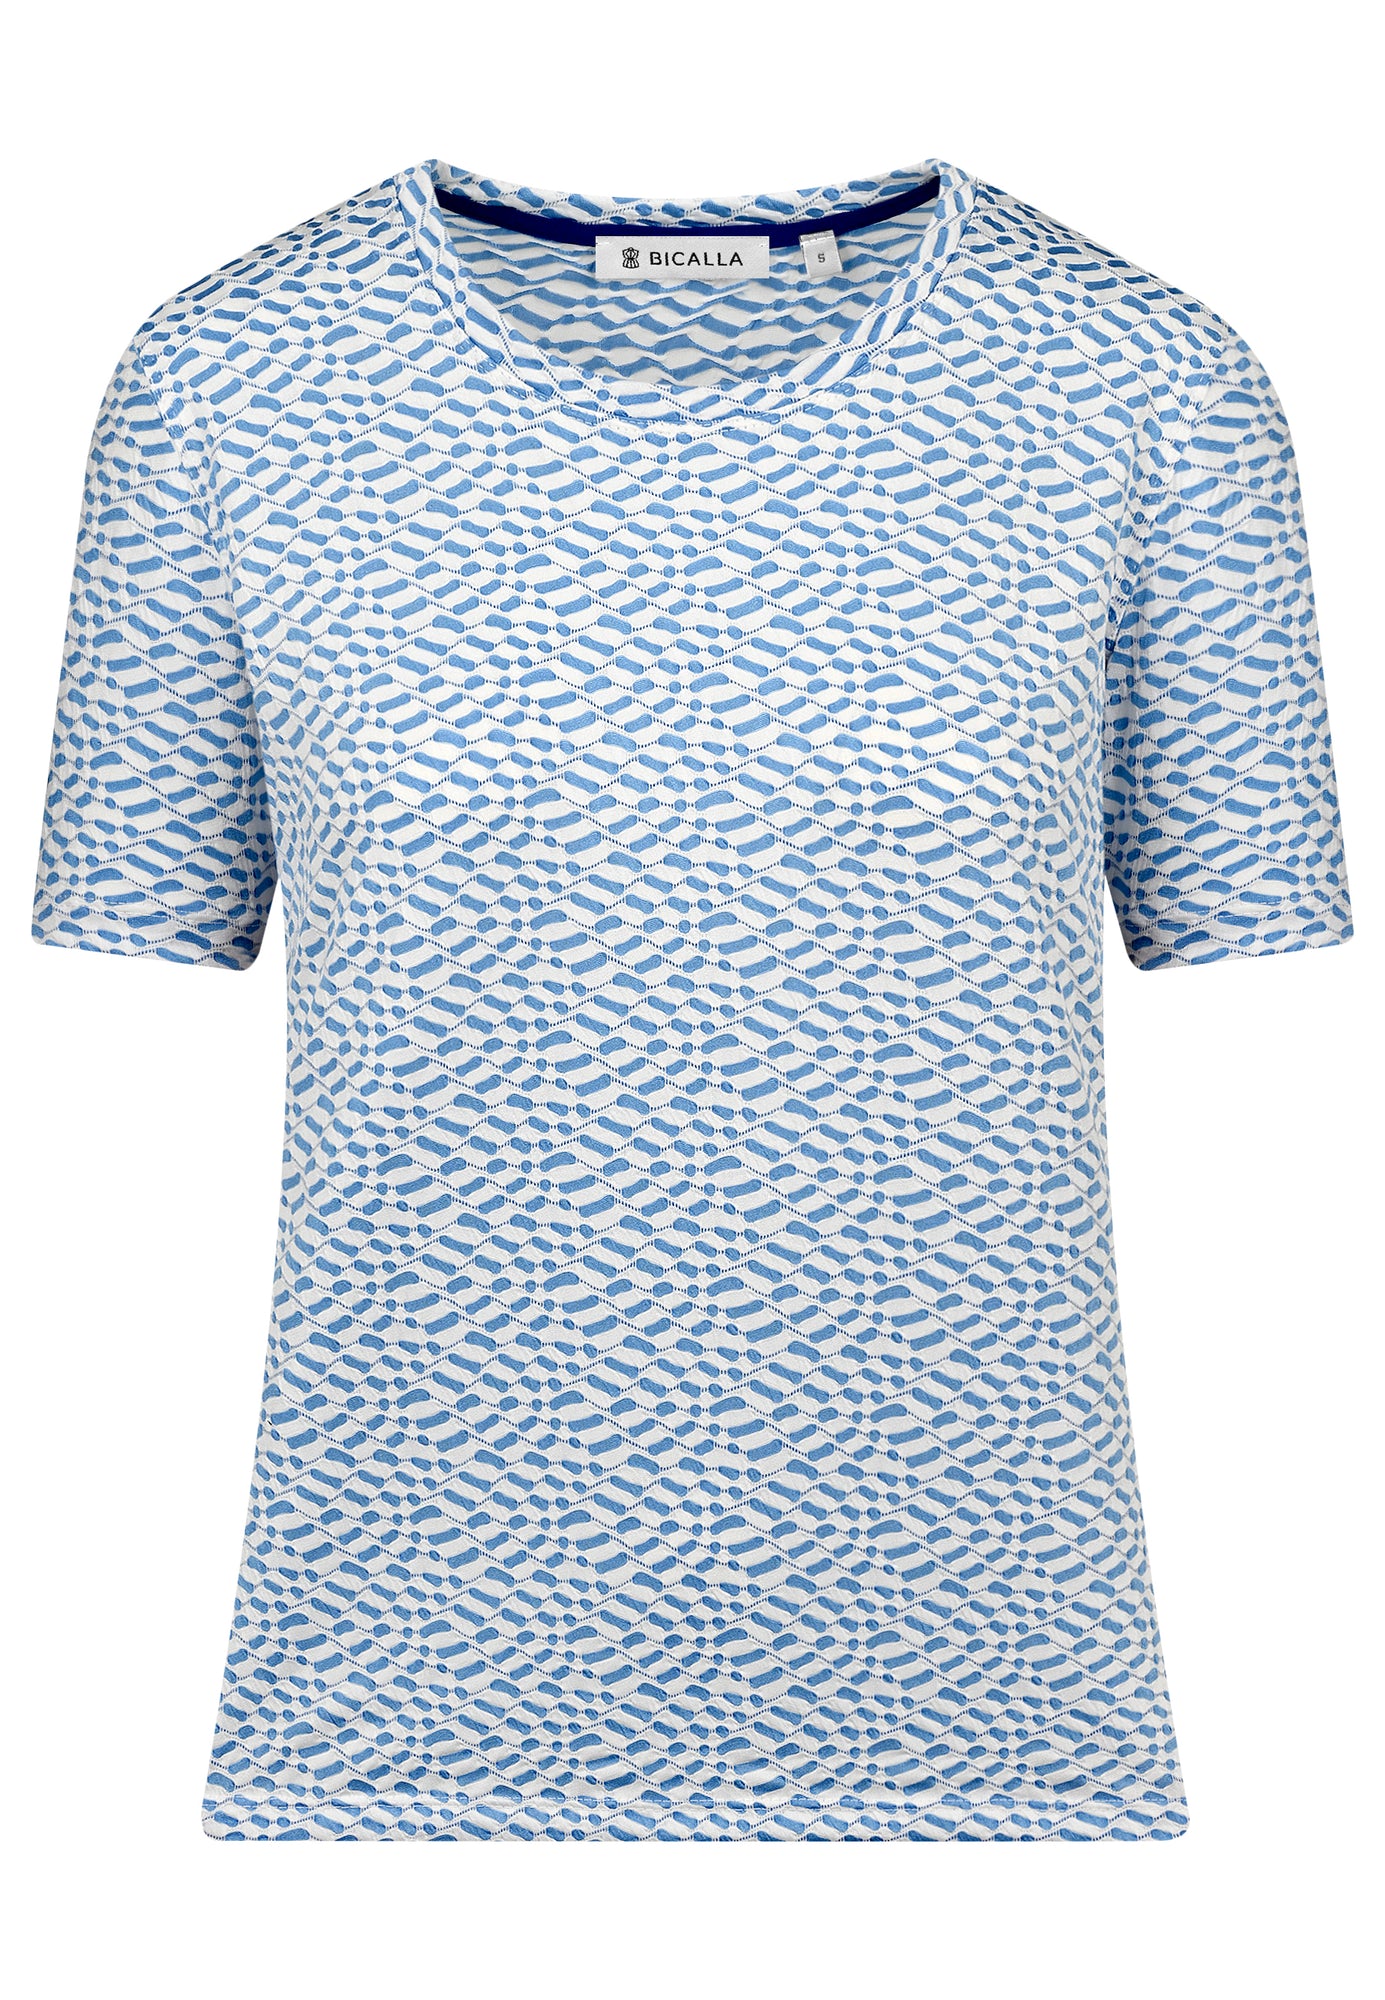 24253 Shirt Bicolor - 01/white-blue